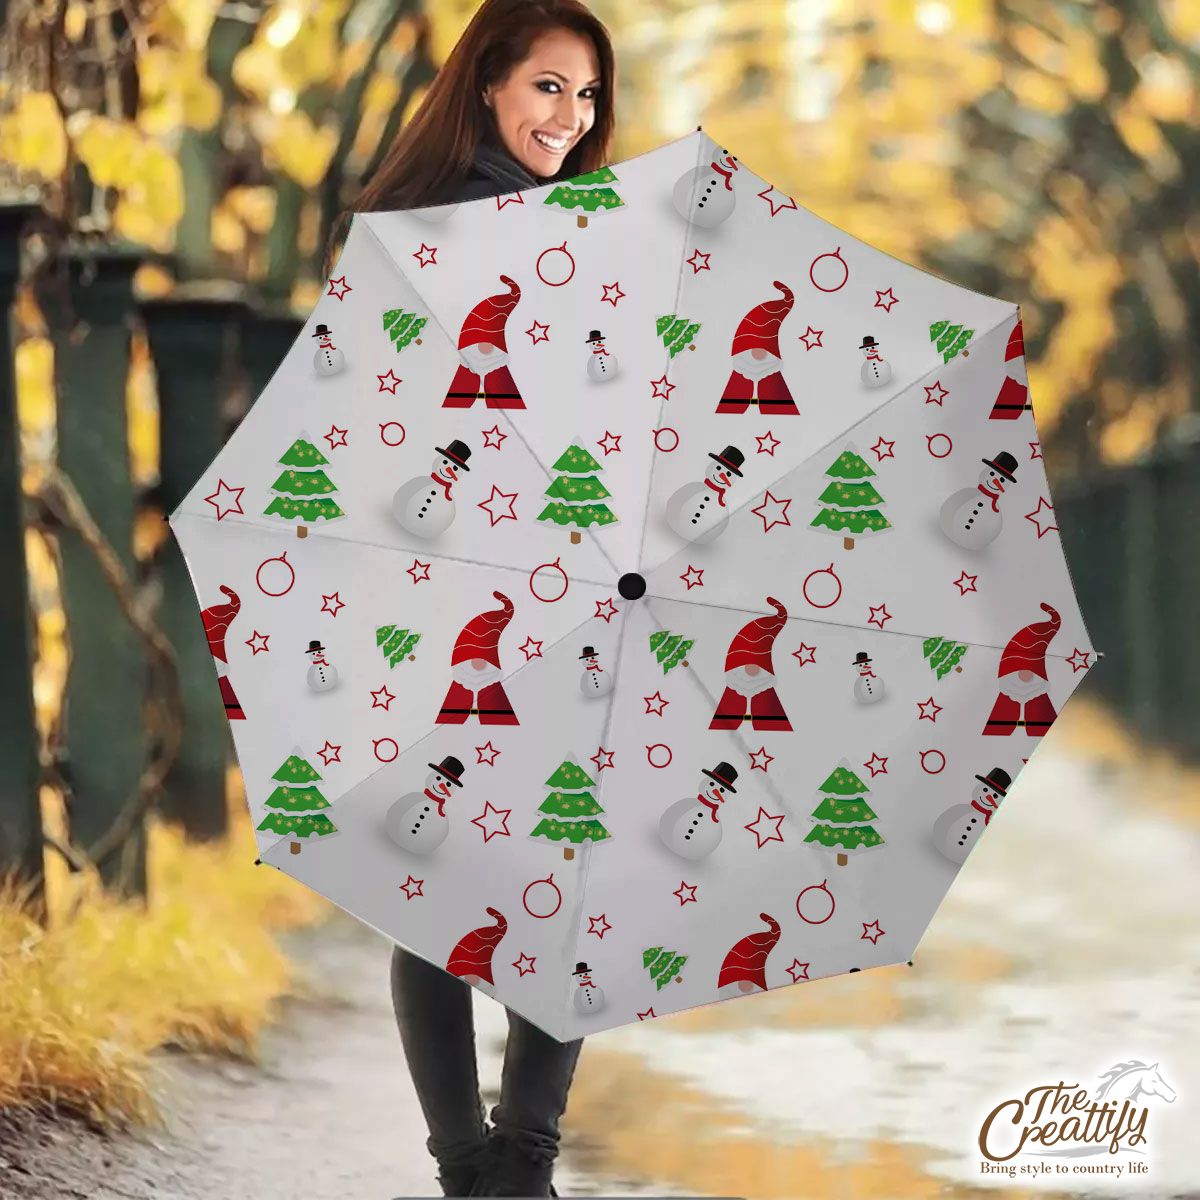 Santa Claus, Snowman Clipart And Pine Tree Silhouette Seamless Pattern Umbrella